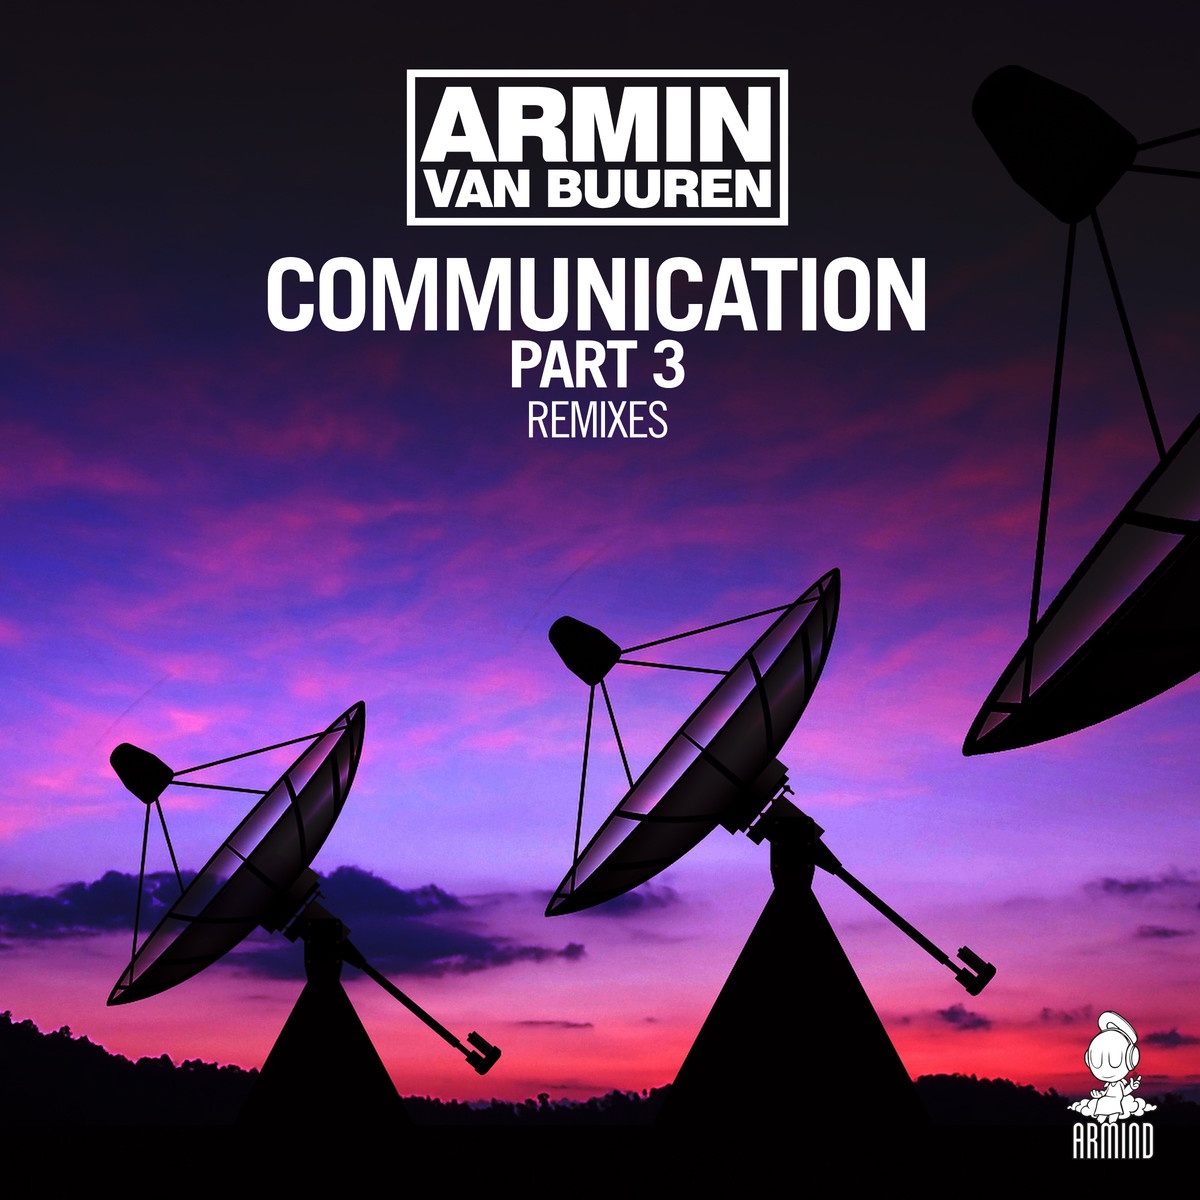 Communication (John Askew Remix)